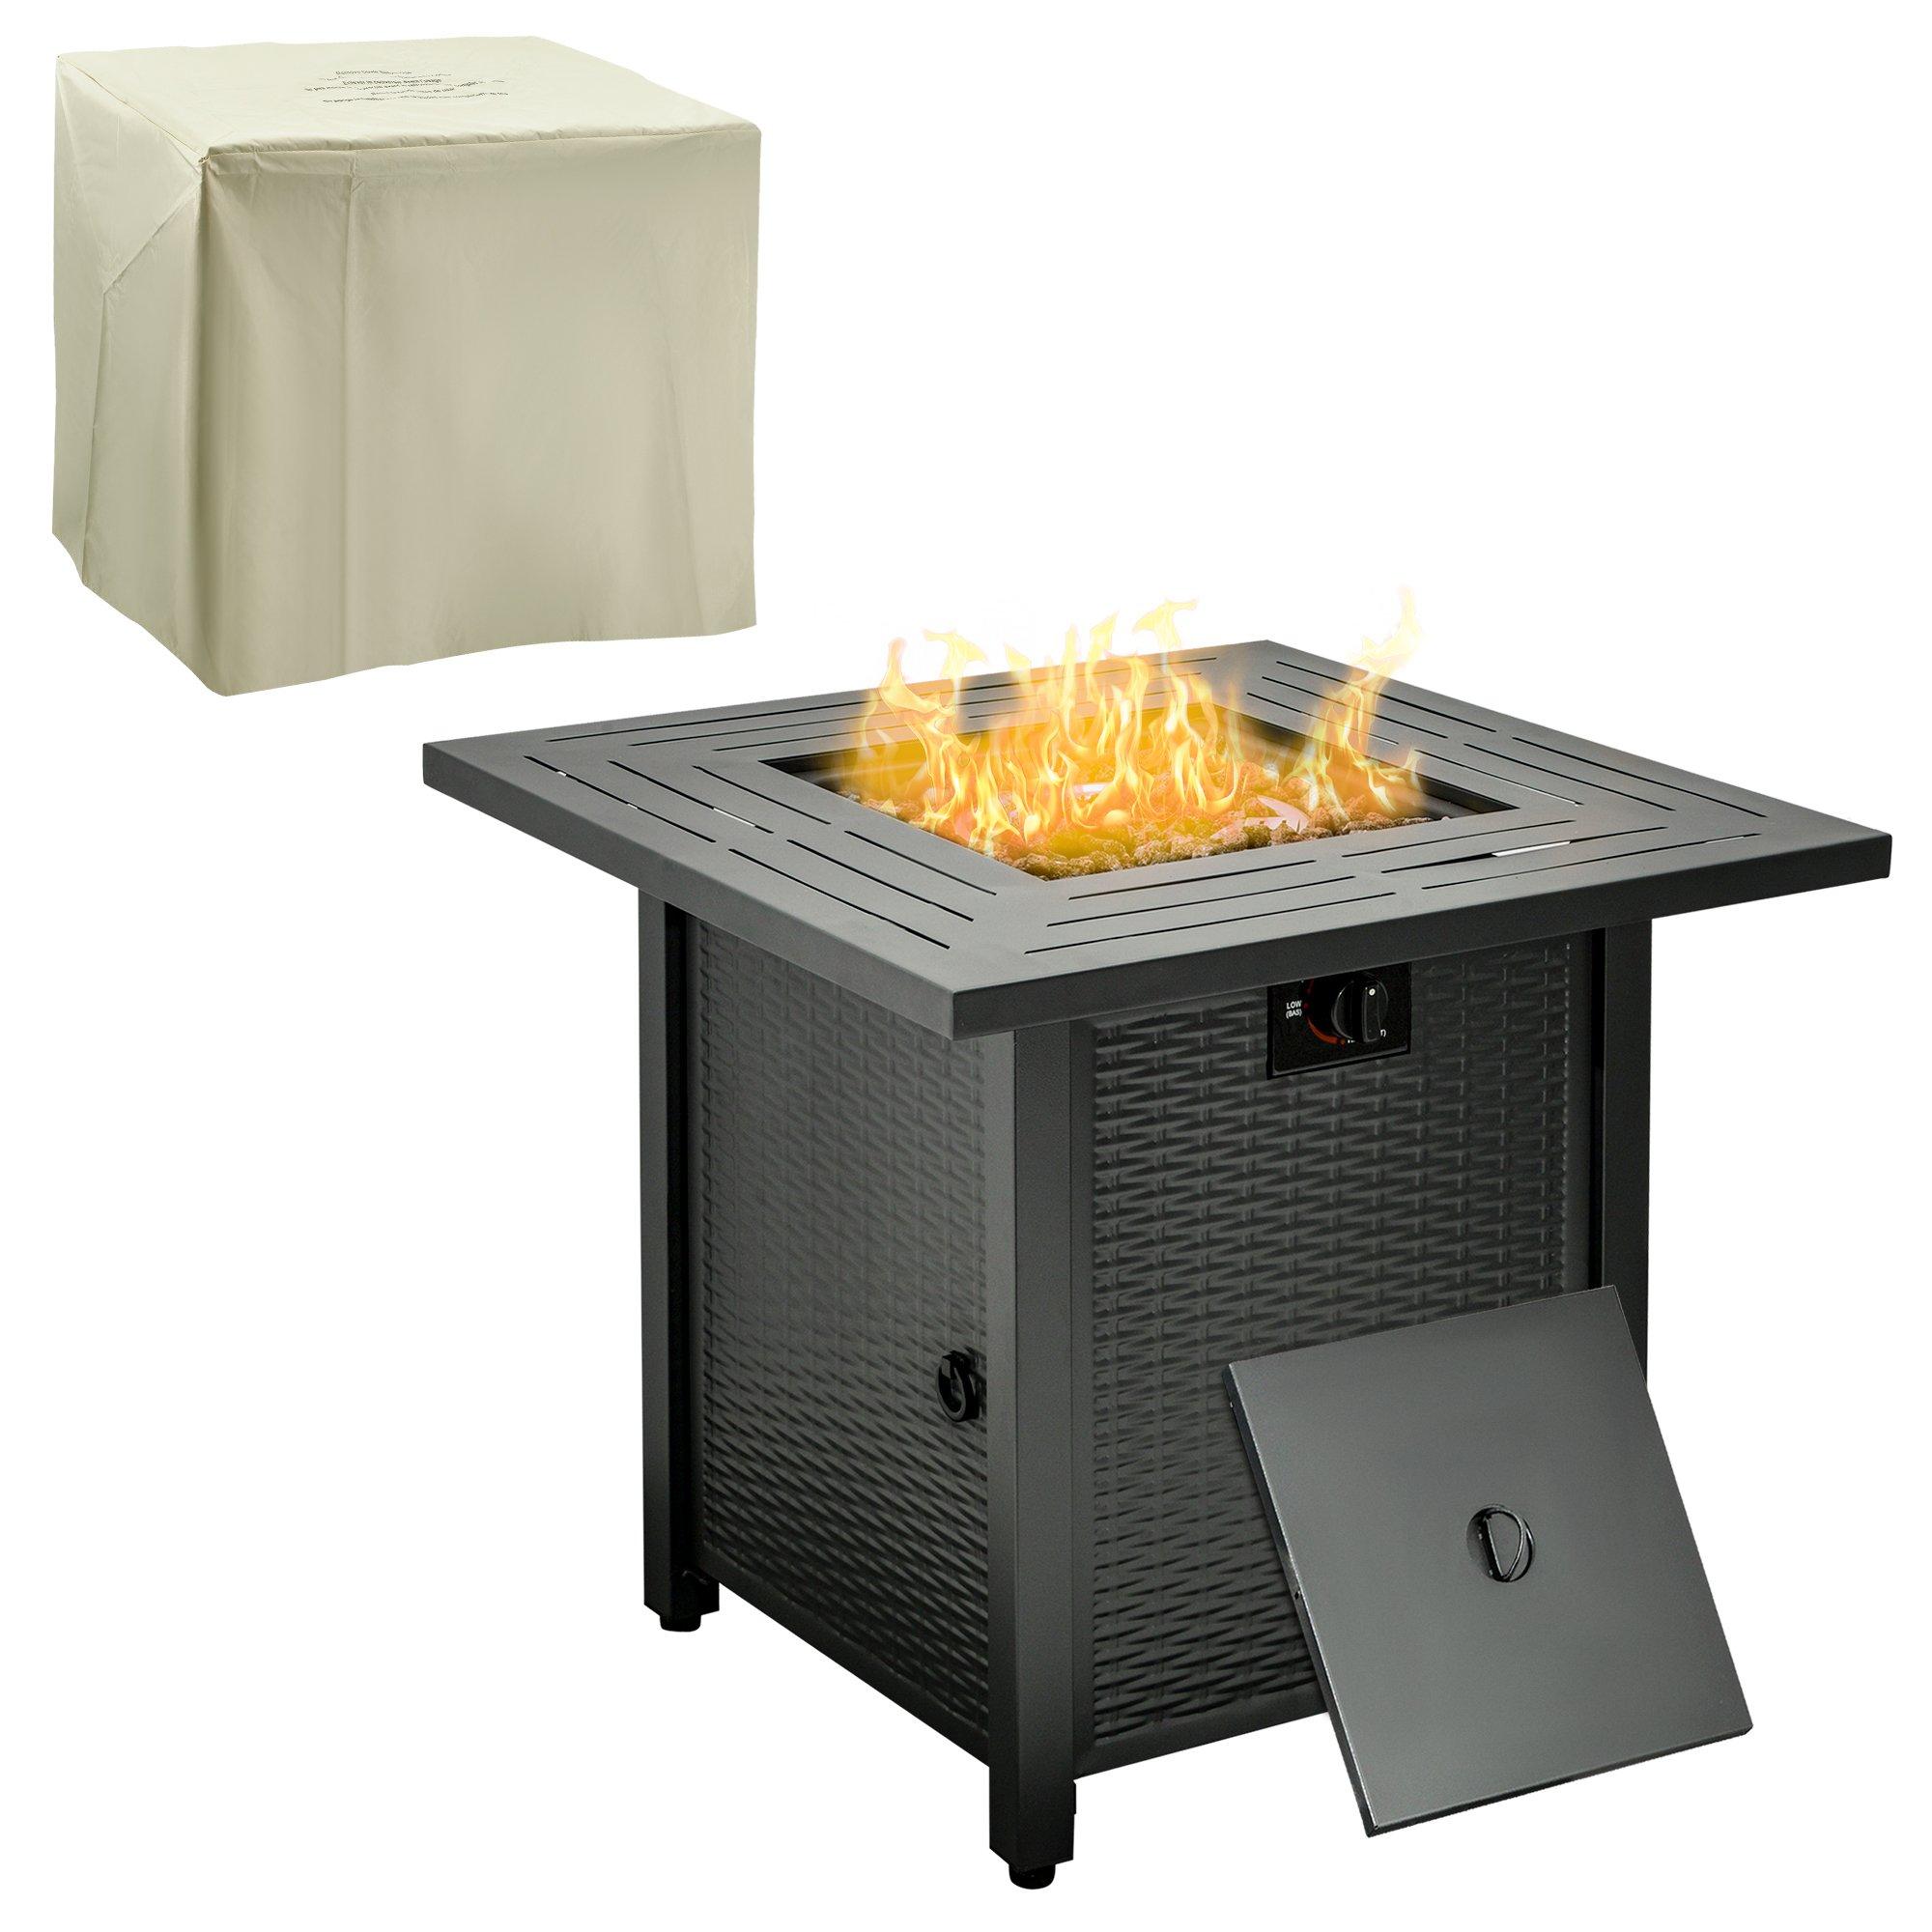 Outdoor Propane Gas Fire Pit Table w/ Rain Cover, 40000 BTU, Black